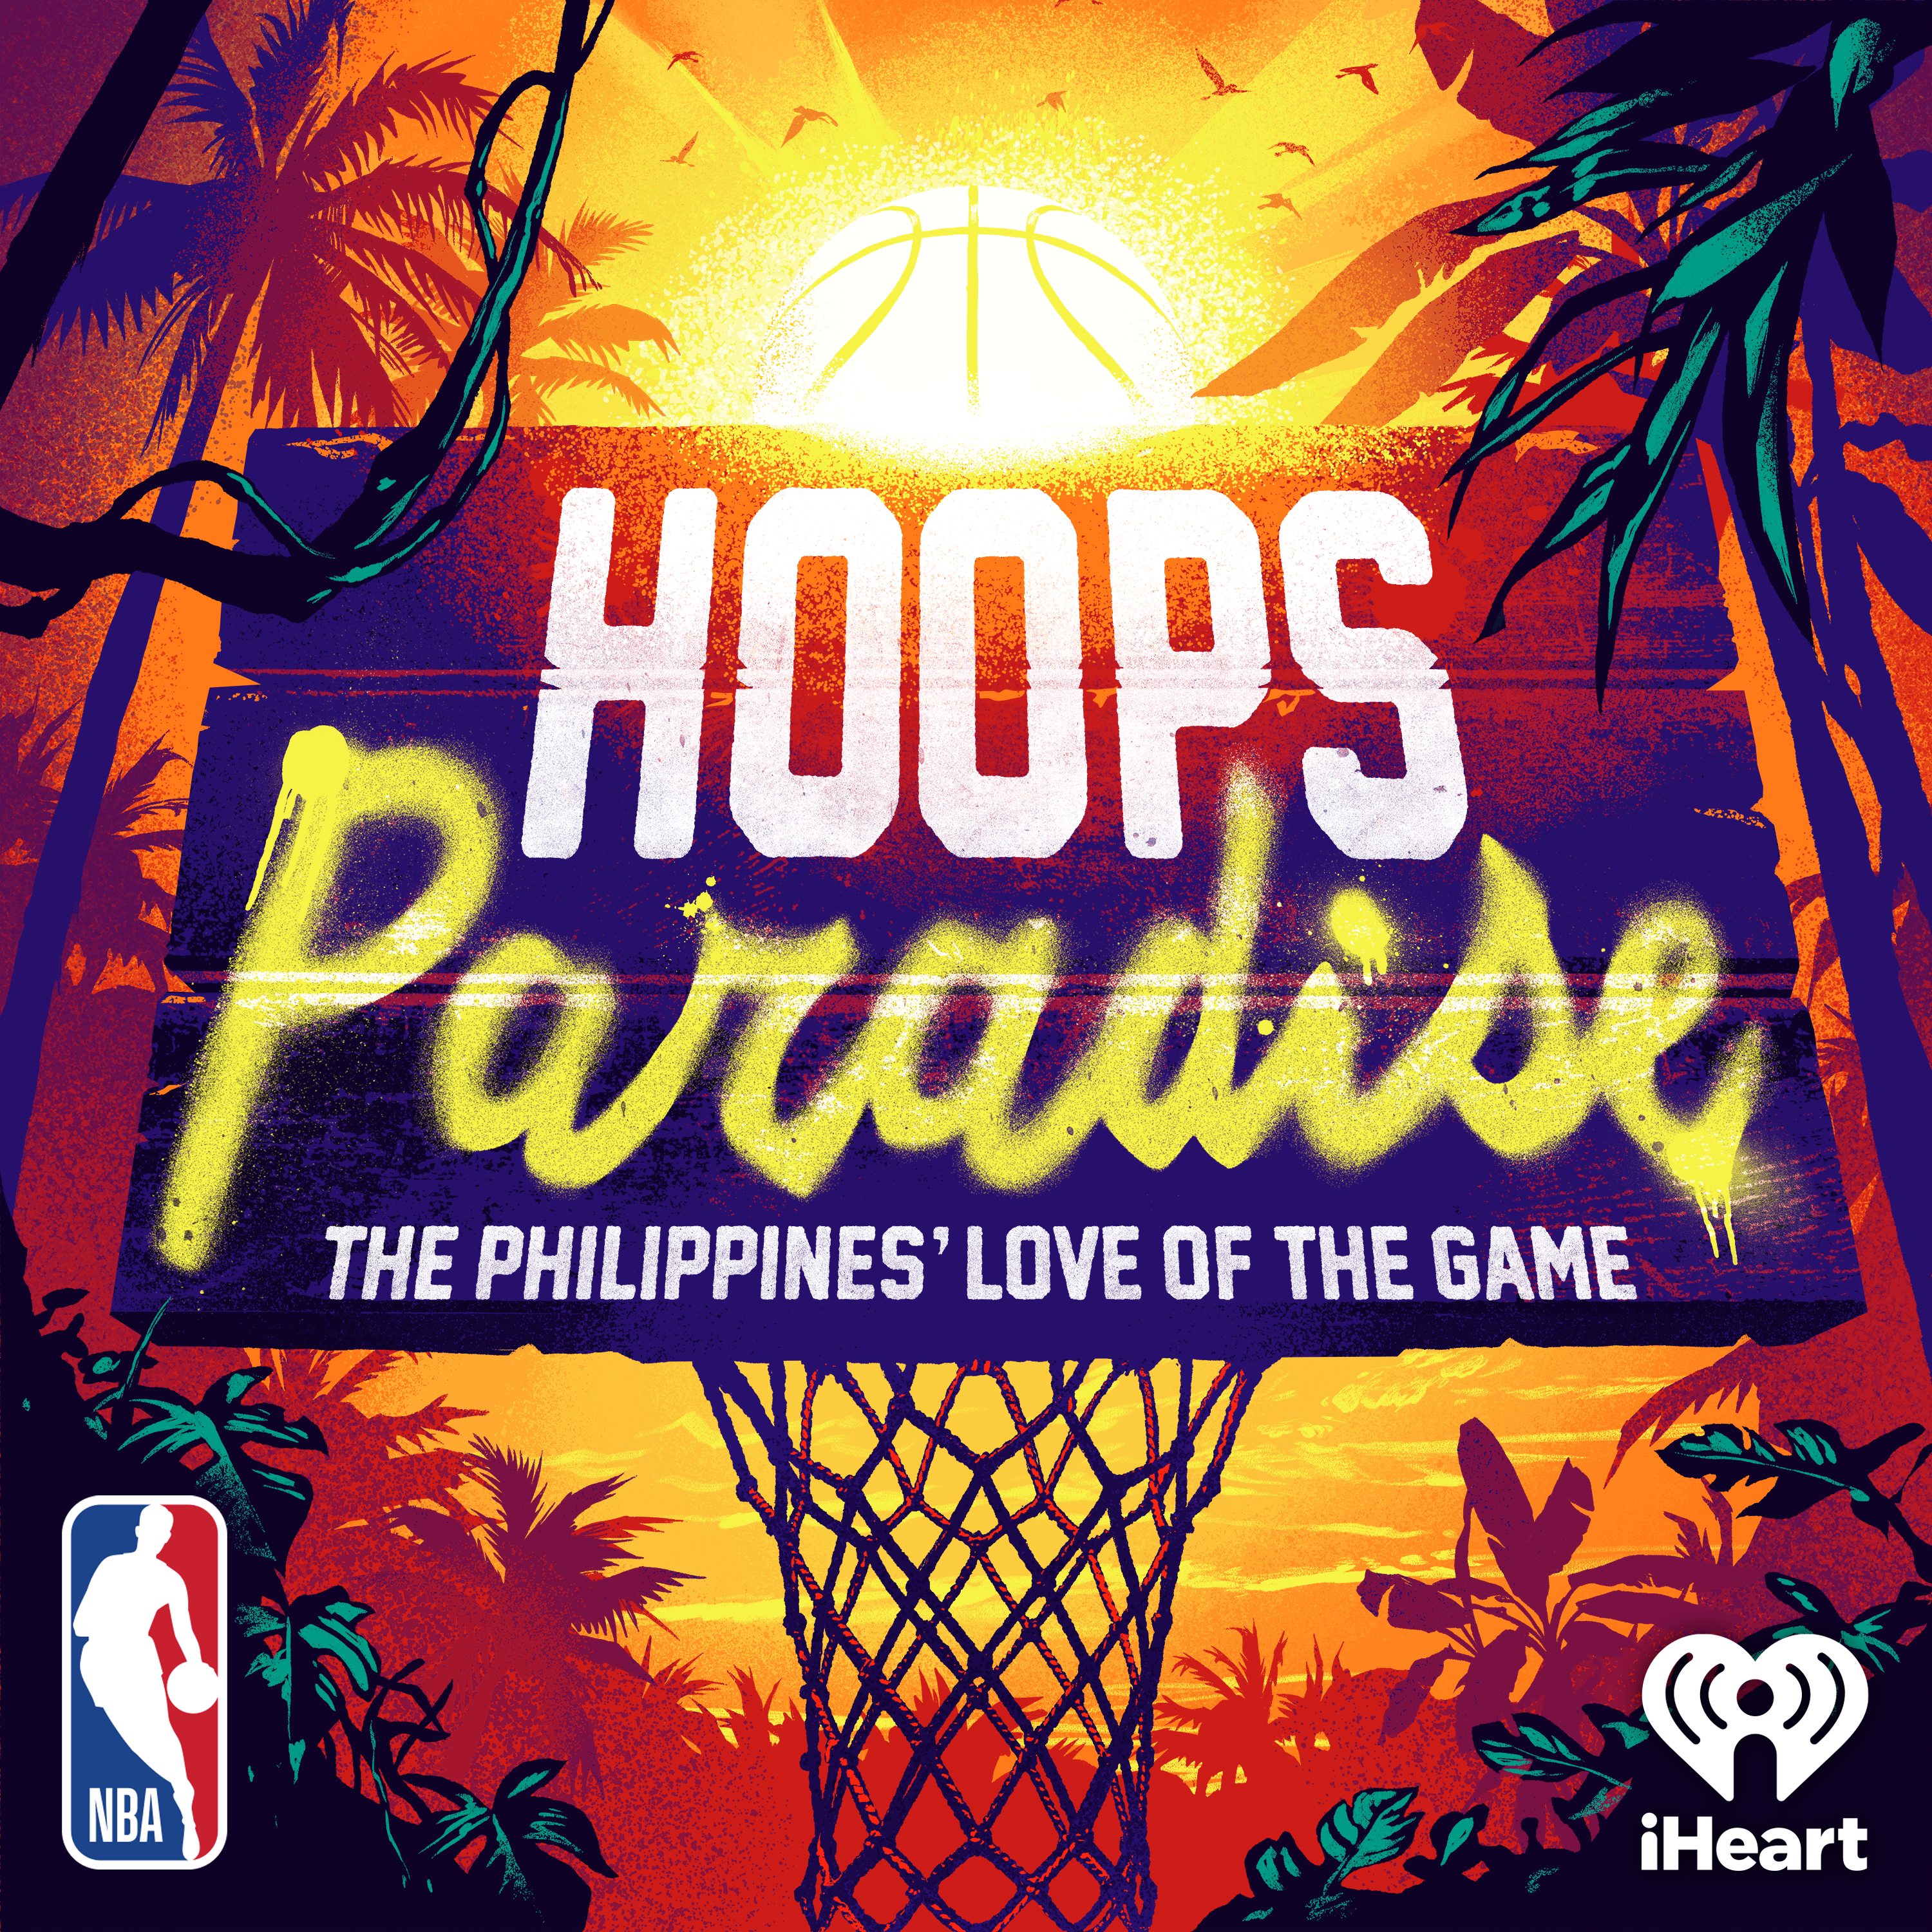 Episode 4 - The NBA in Manila